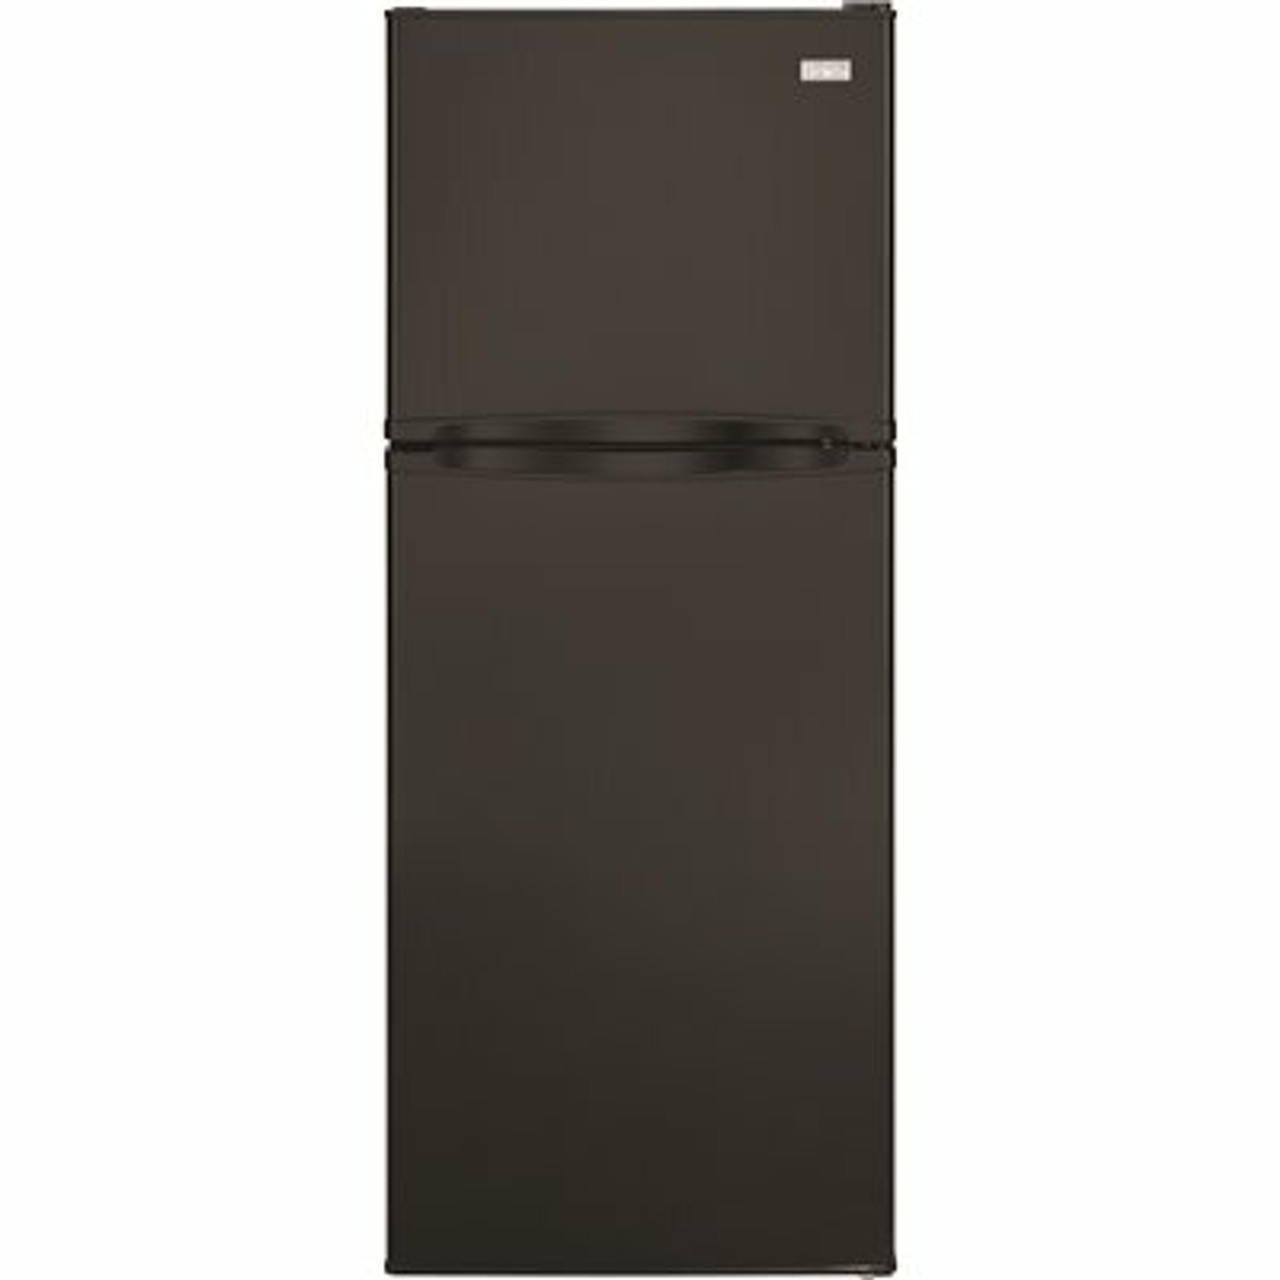 Haier 9.8 Cu. Ft. Top Freezer Refrigerator In Black